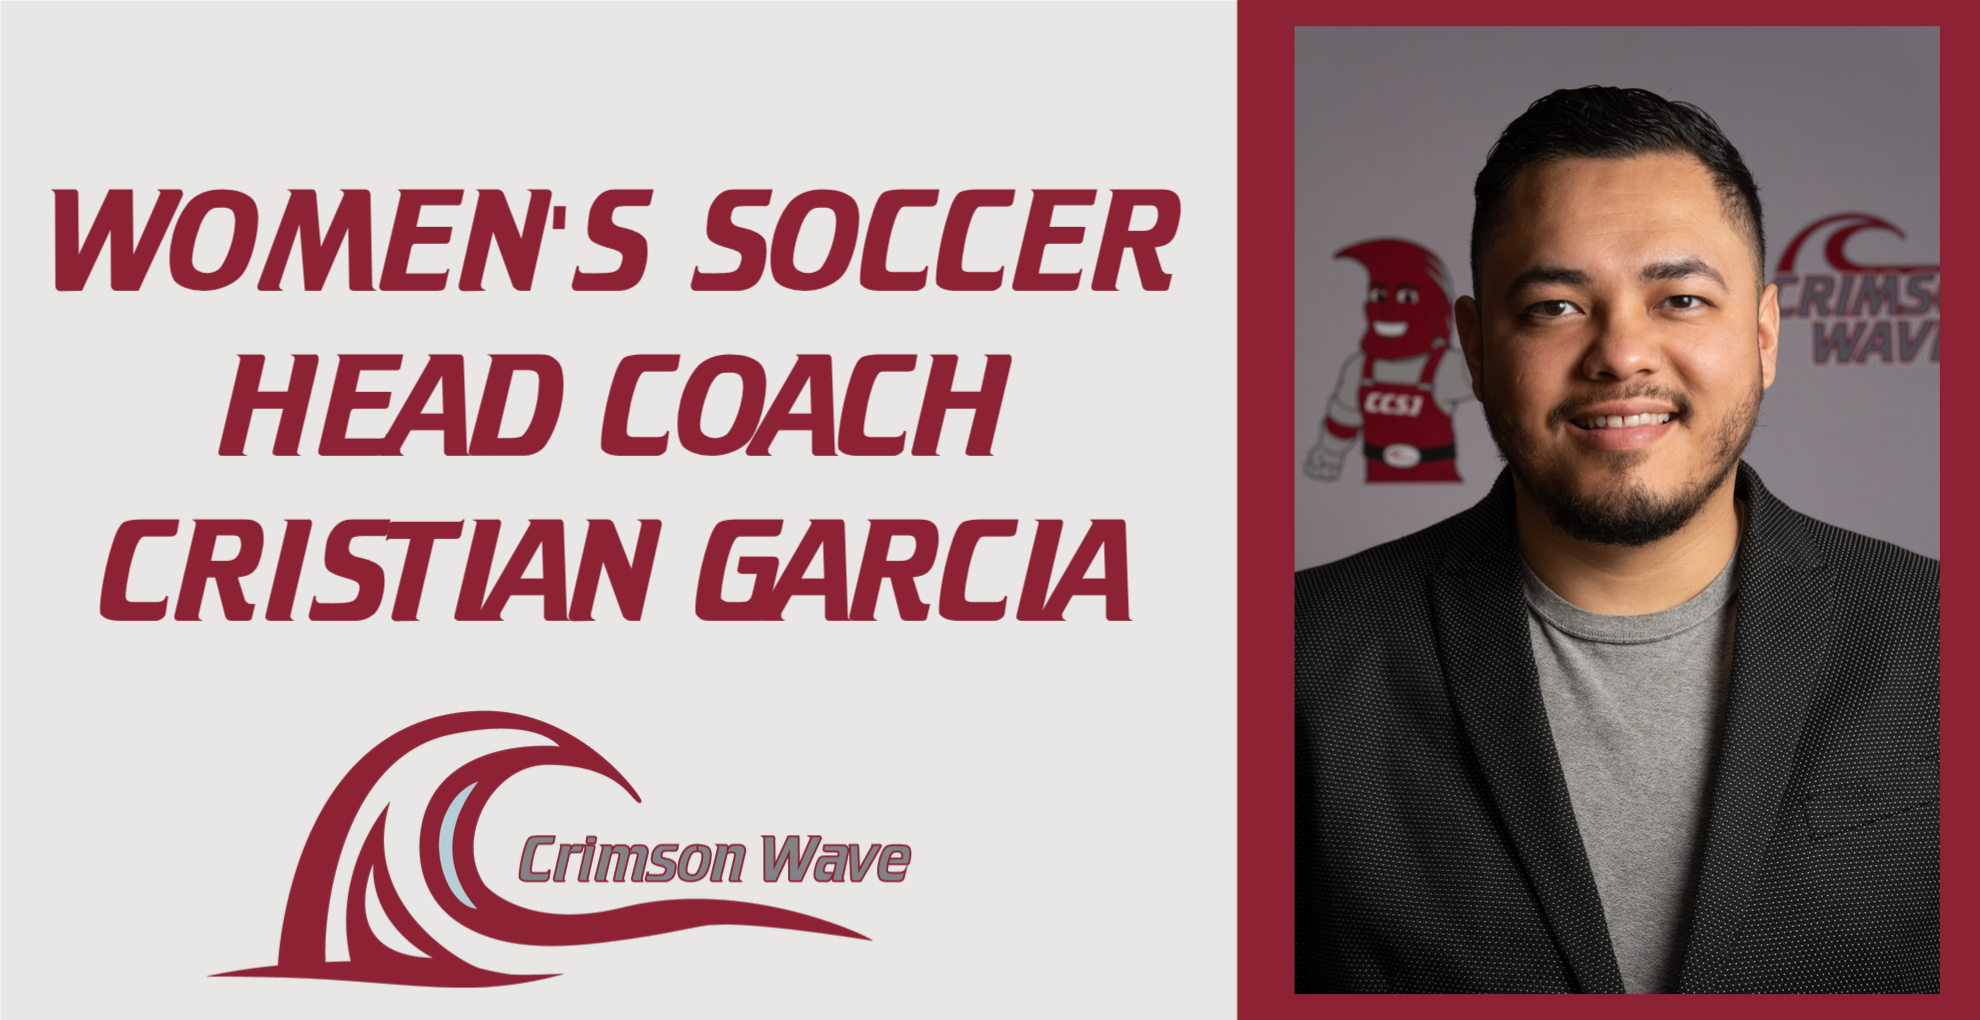 Garcia named CCSJ Women&rsquo;s Soccer Head Coach